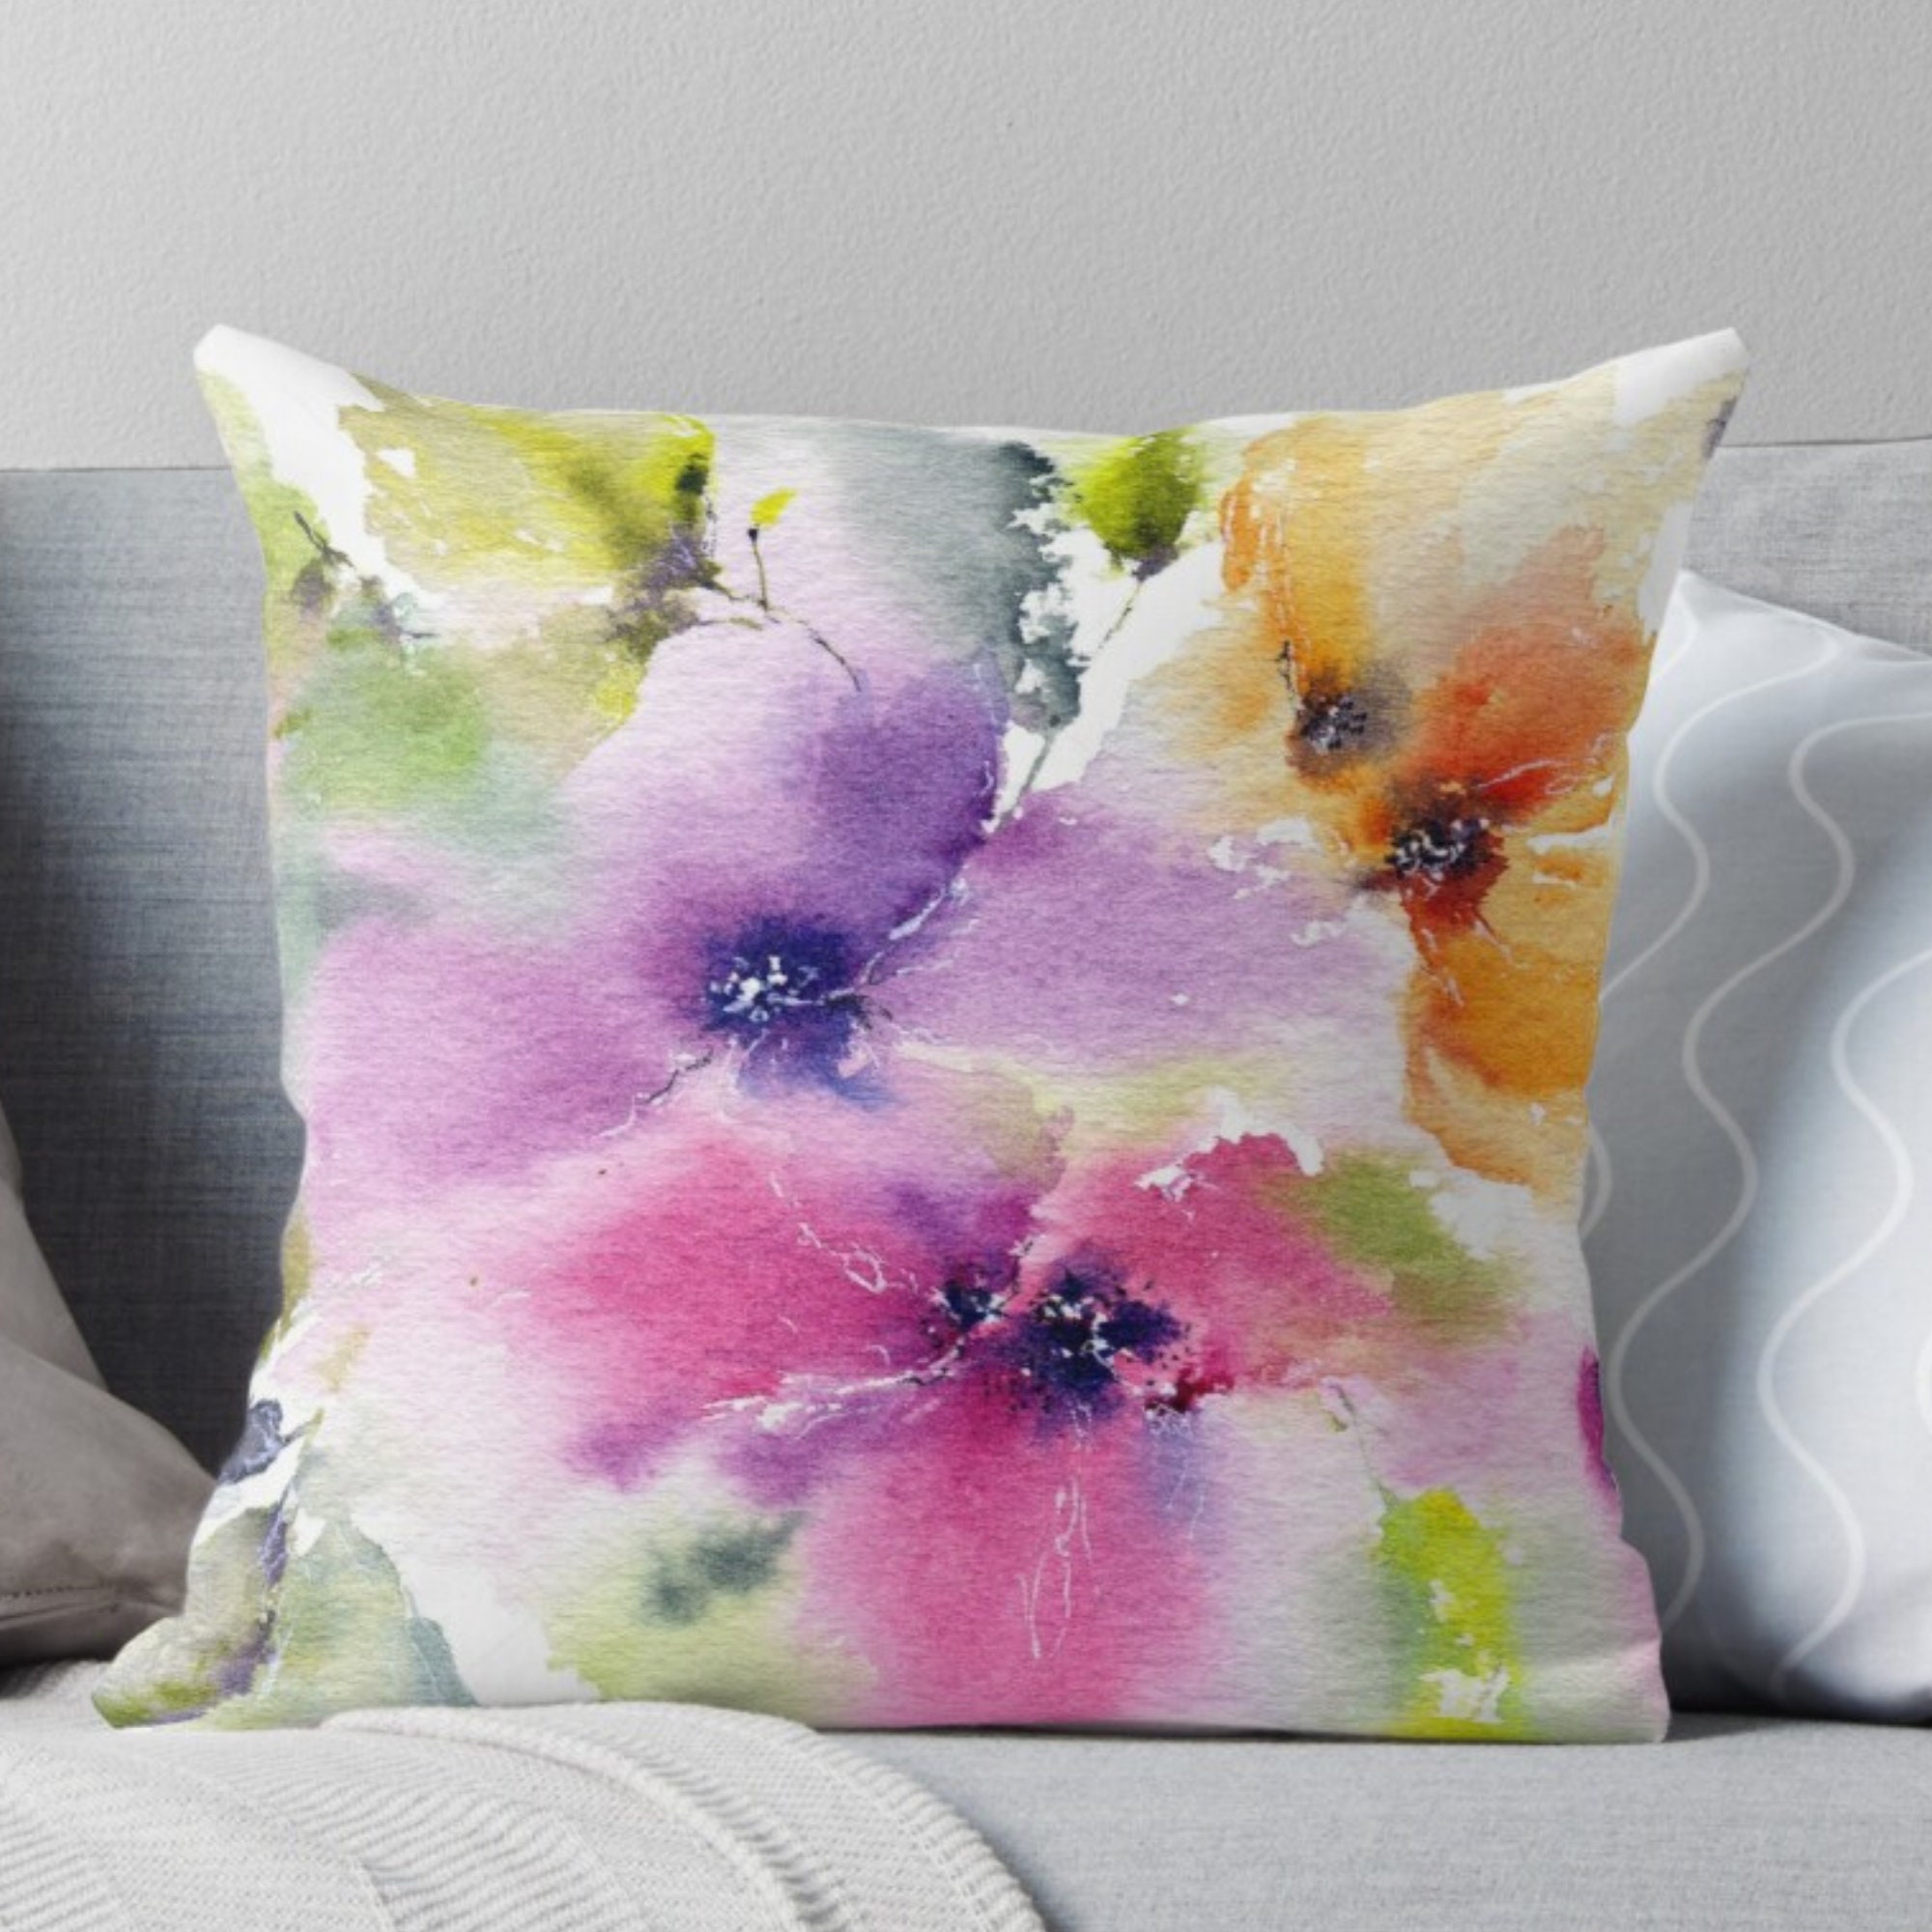 Floral Digitally Print Satin Cushion Cover Orange Pillow Case Cover Décor 12X12"